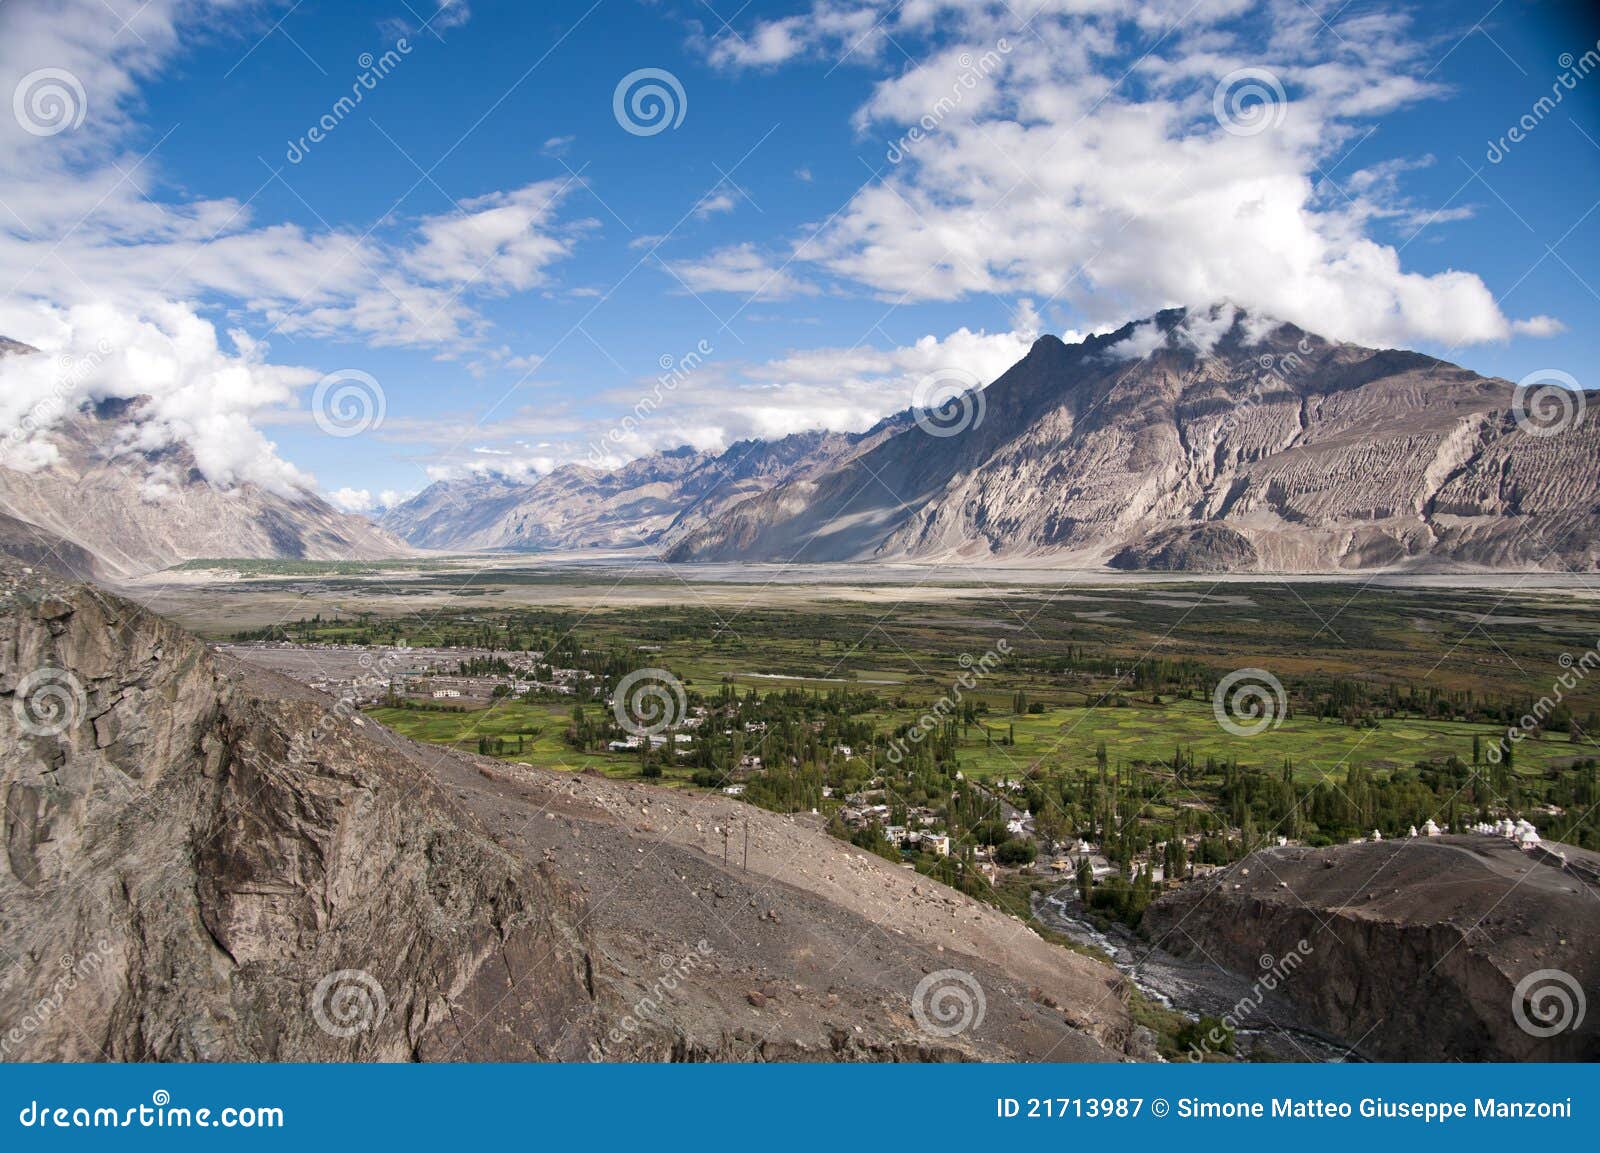 himalayan valley, ladakh, india